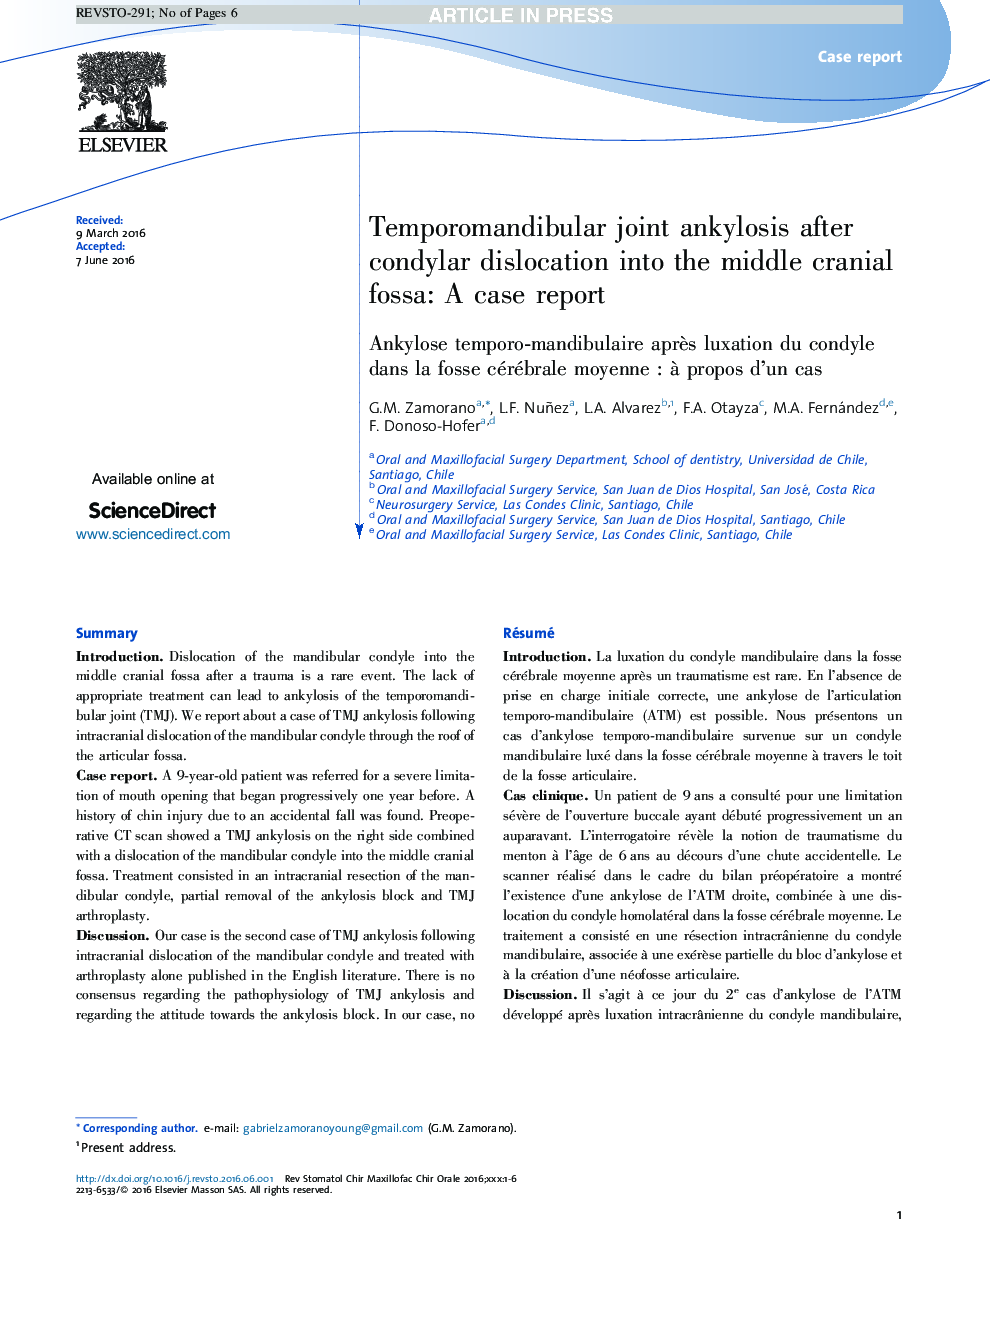 Temporomandibular joint ankylosis after condylar dislocation into the middle cranial fossa: A case report